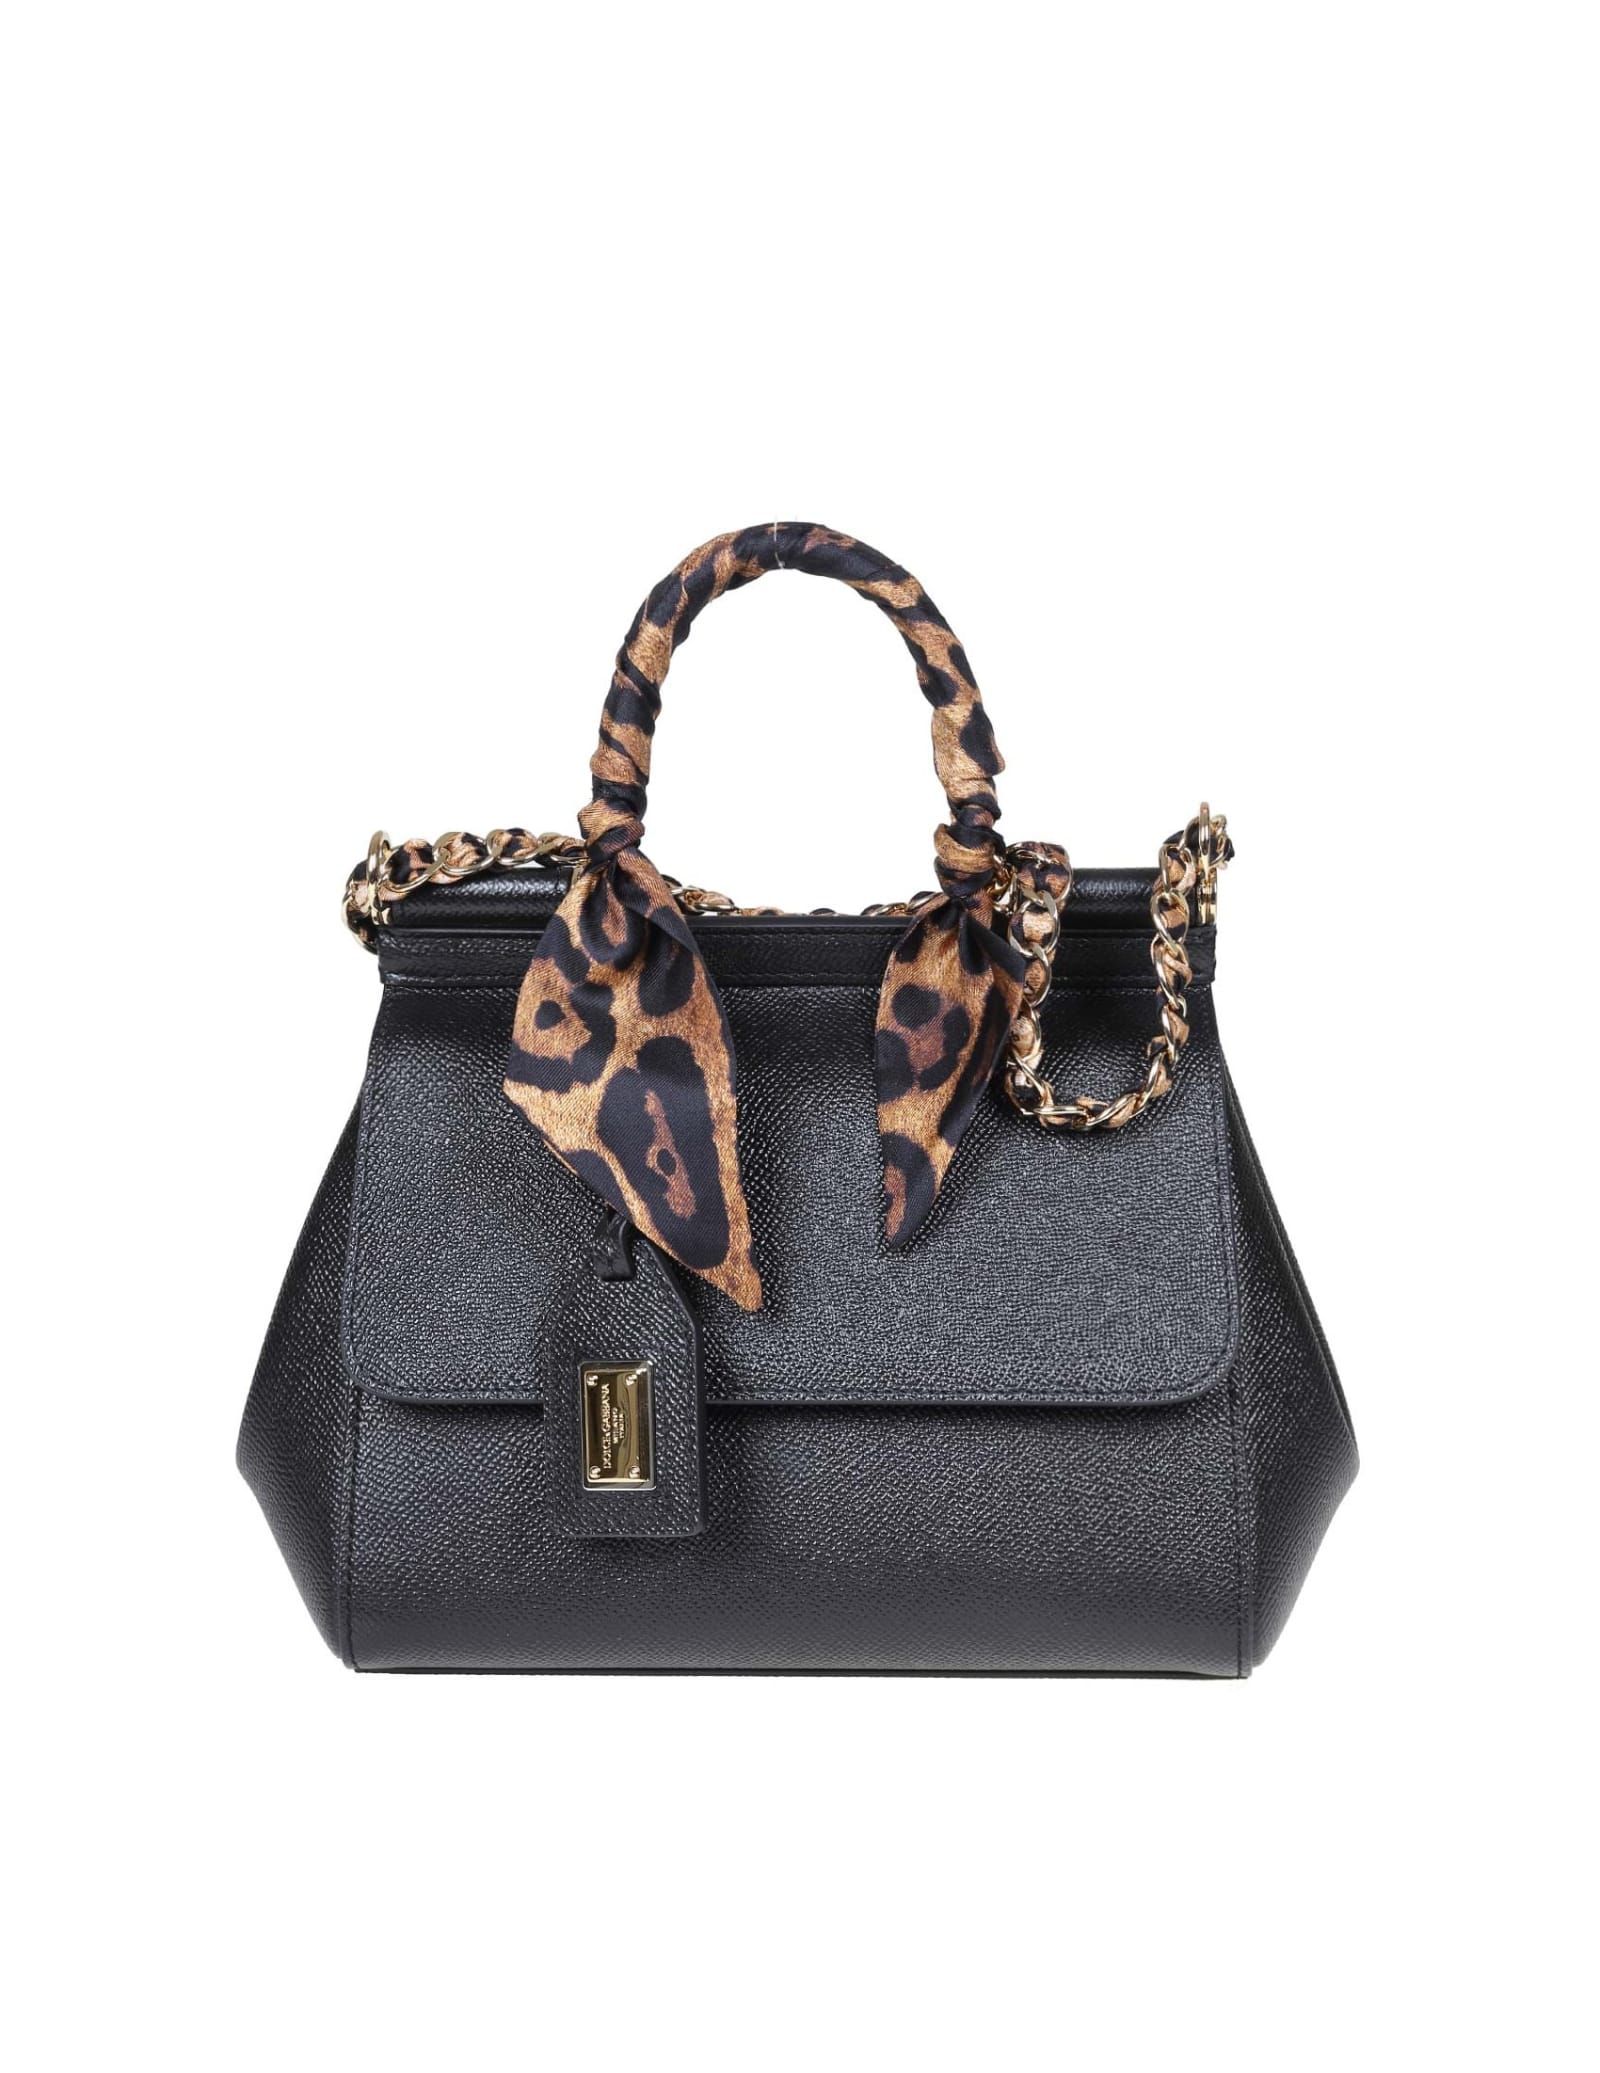 Dolce & Gabbana Sicily Leather Bag With Foulard